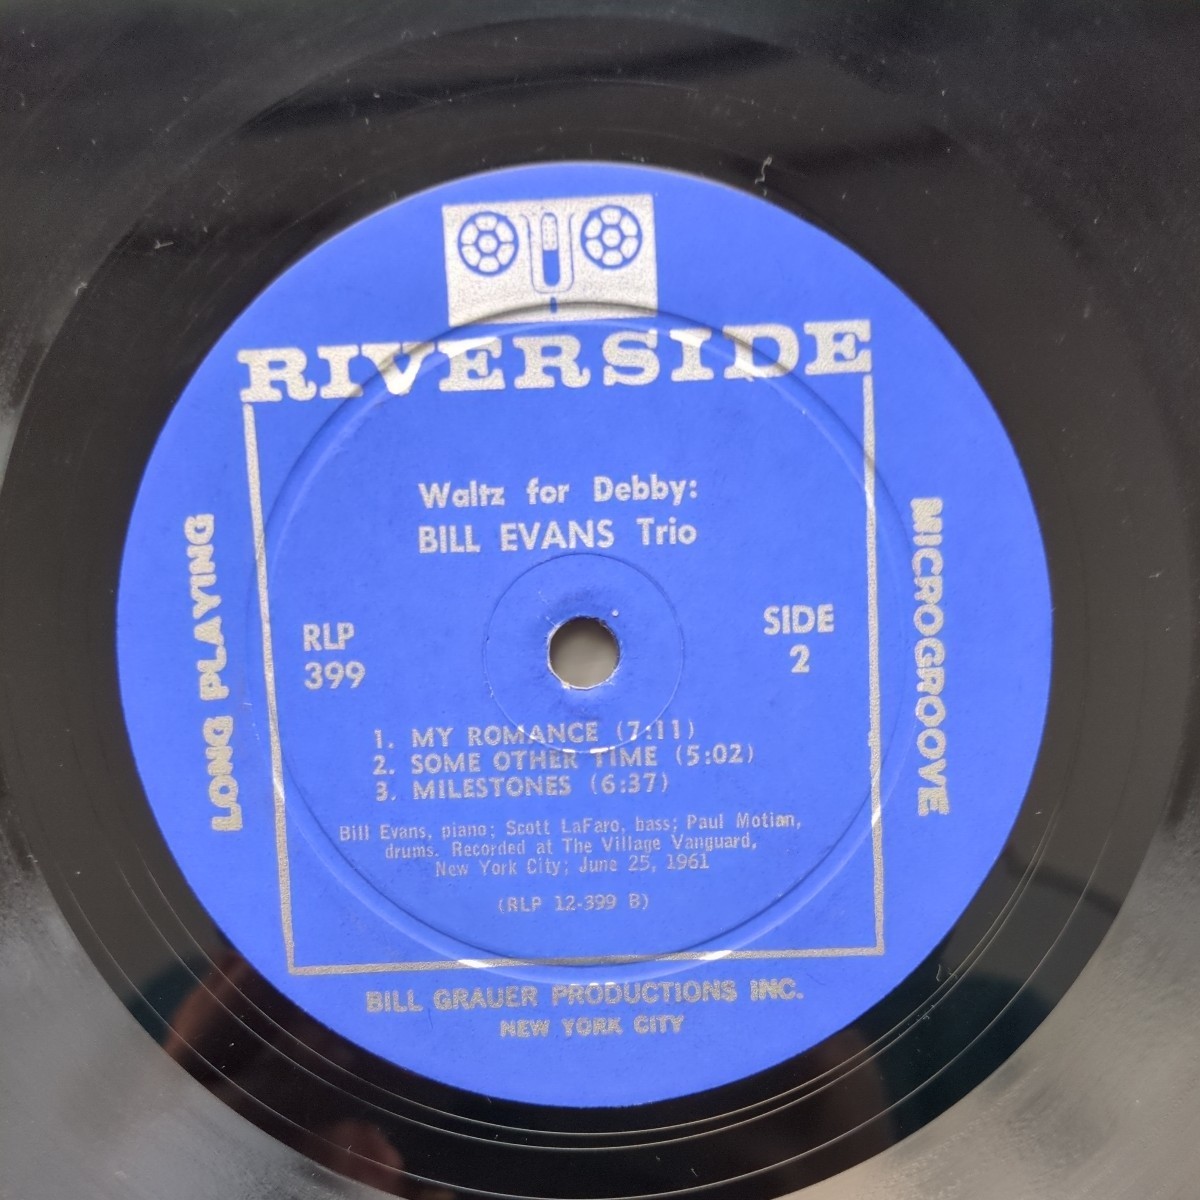 US original MONO wide DG bill evans ビル・エヴァンス Waltz for Debby rlp399 Riverside 溝 analog record レコード LP アナログ vinyl_画像5